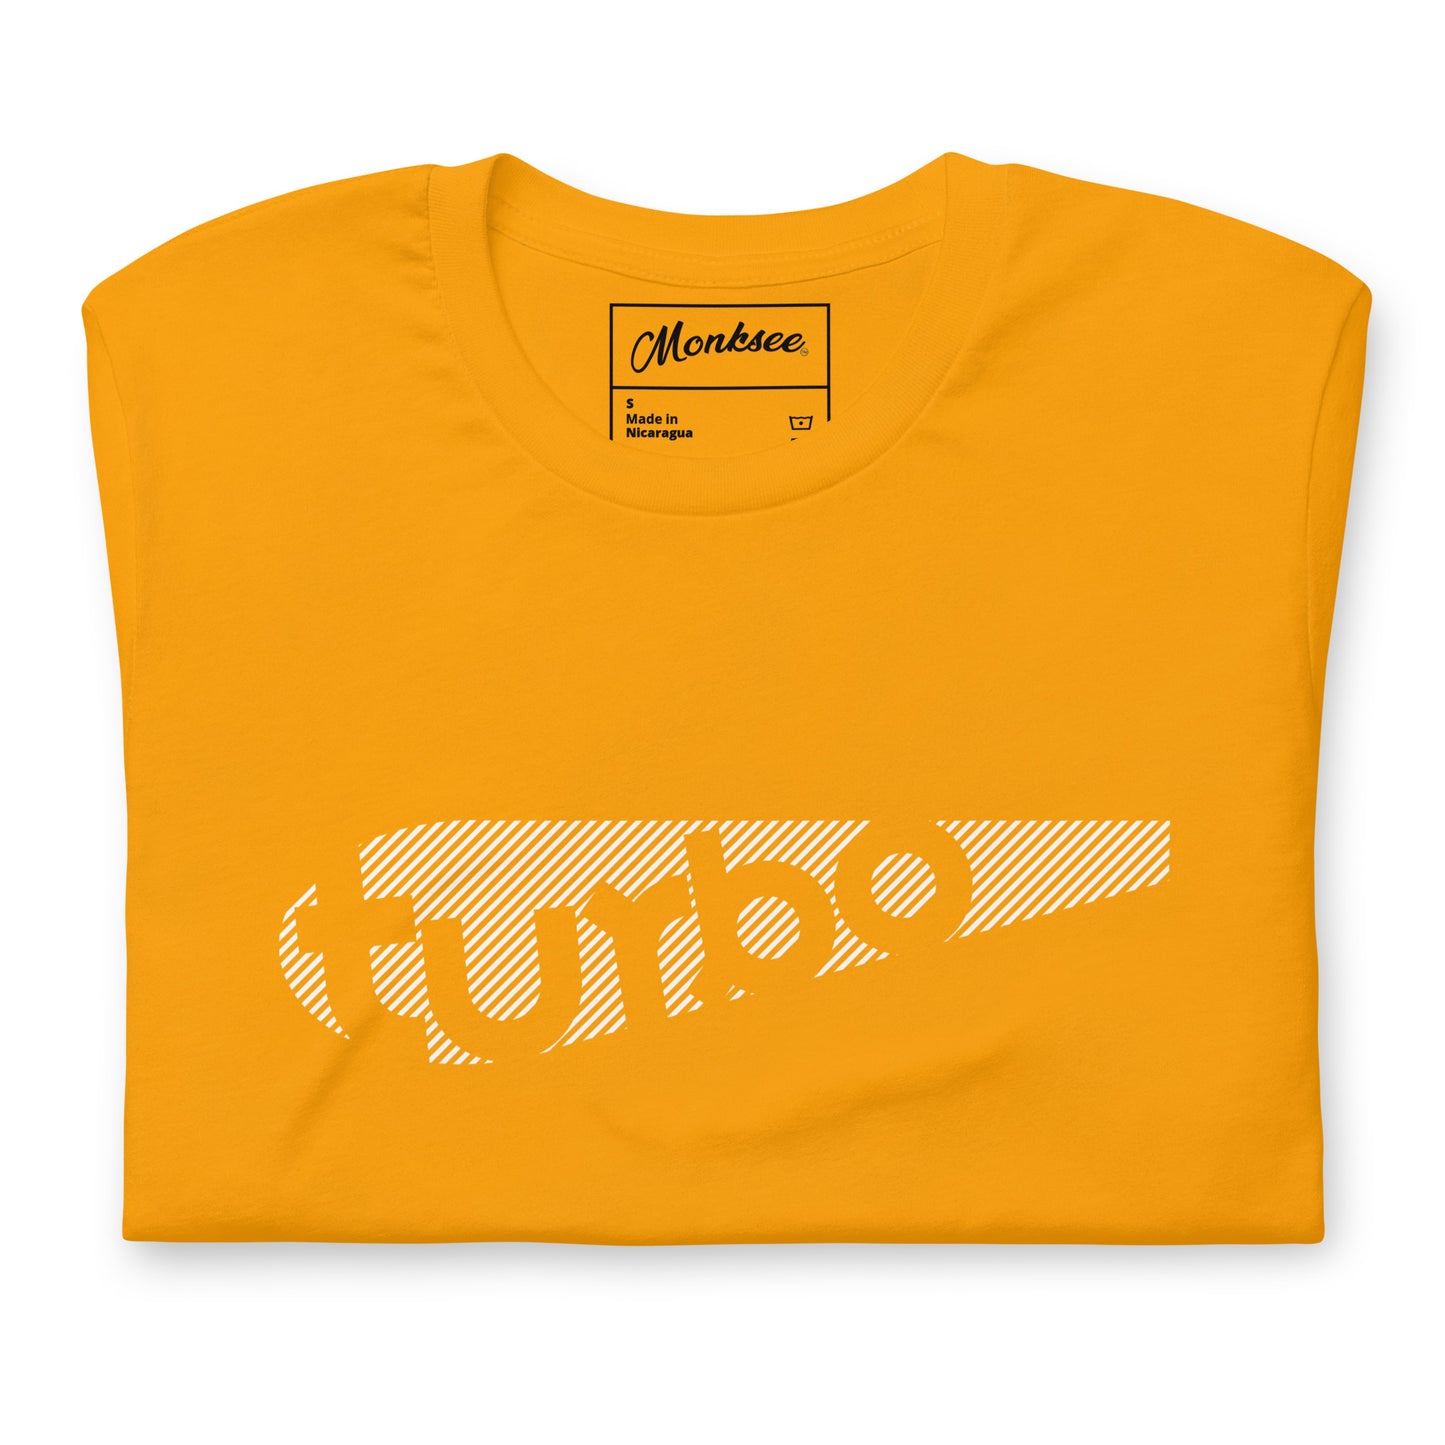 Turbo t-shirt.